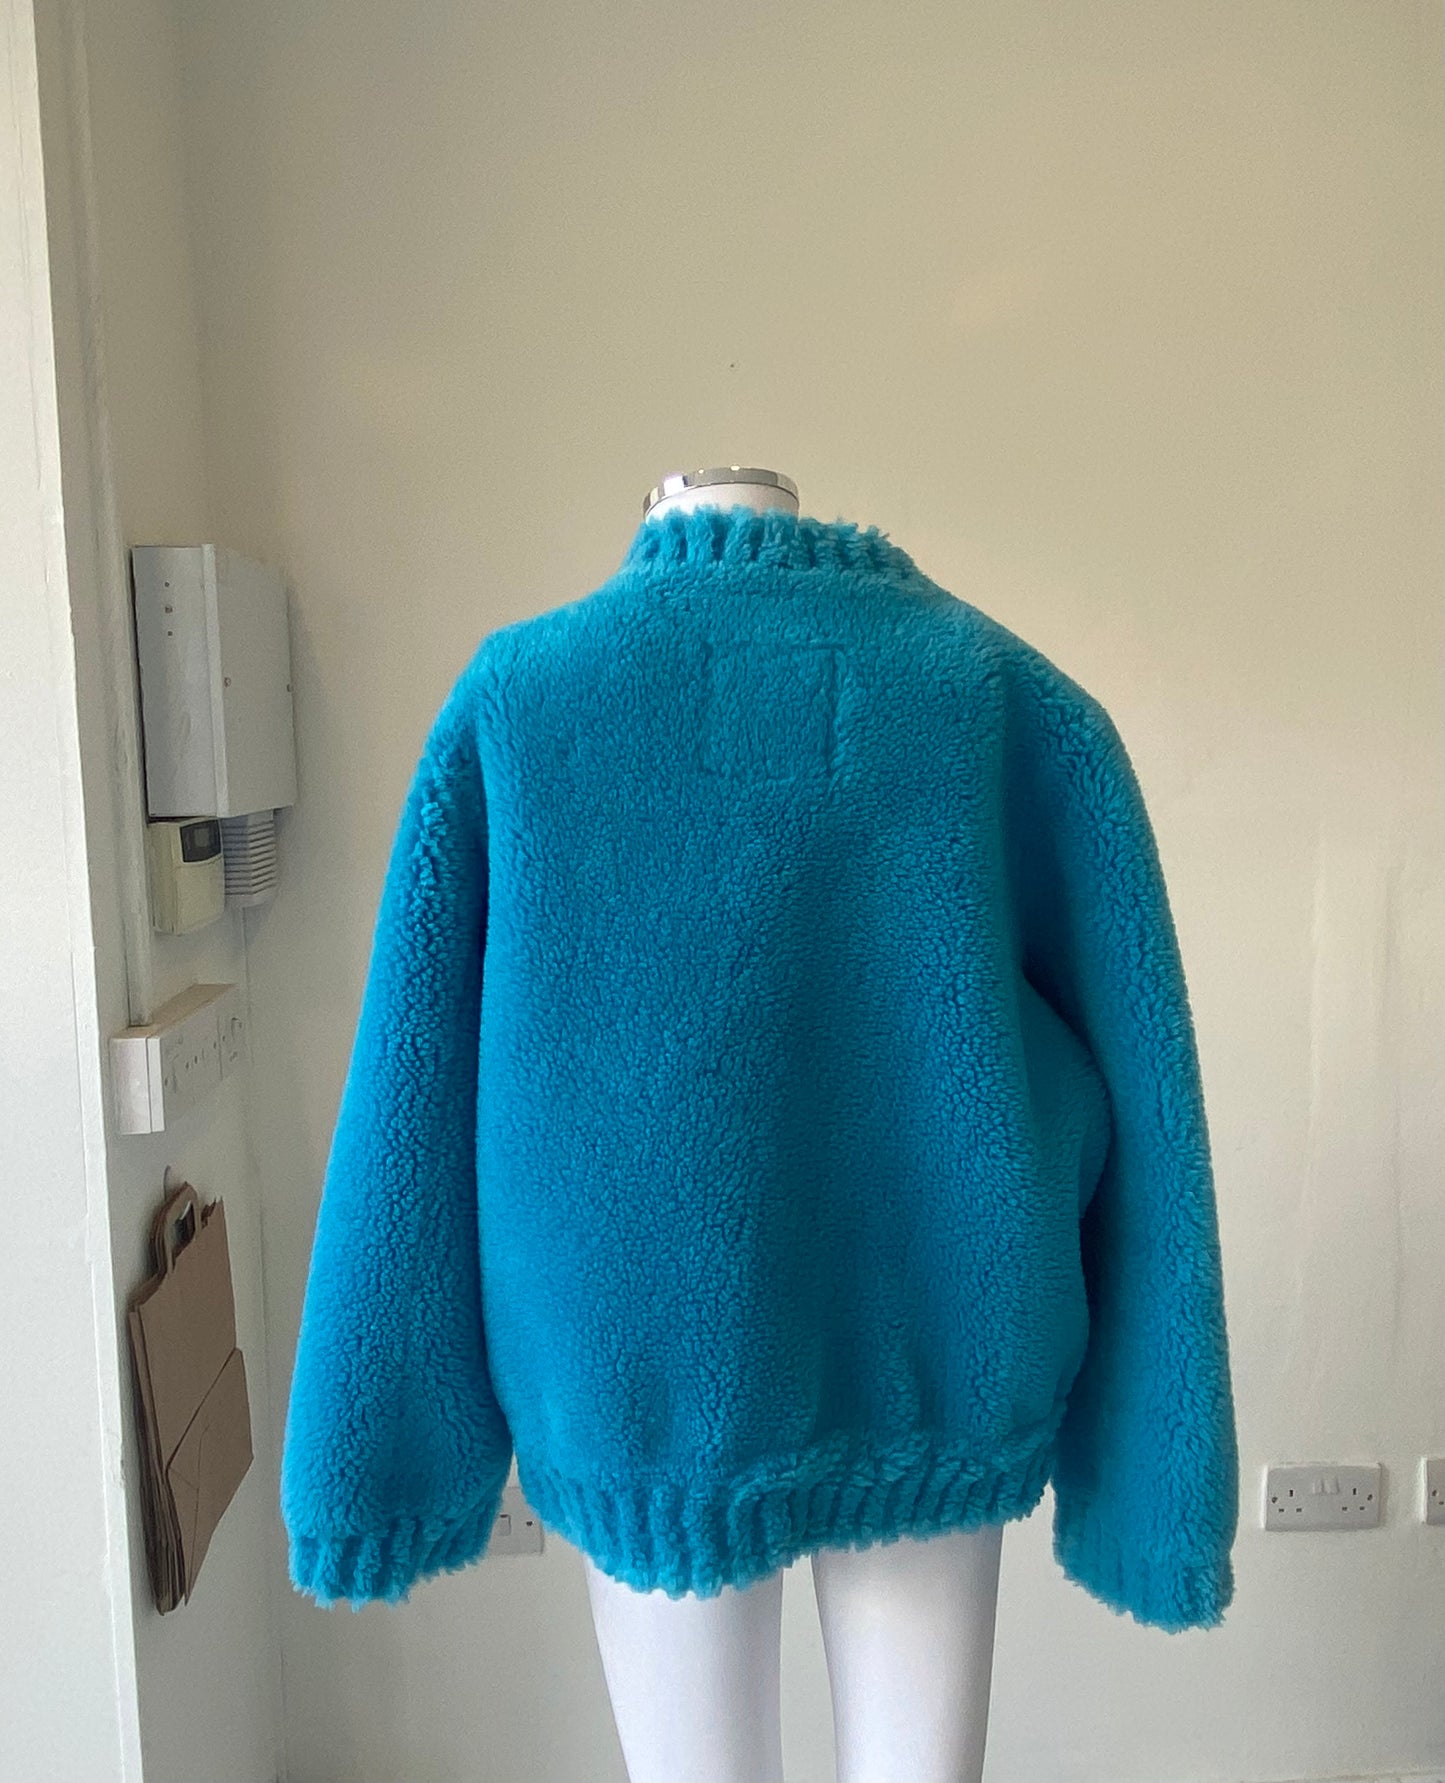 Popski London Blue Teddy Coat Size 8-12